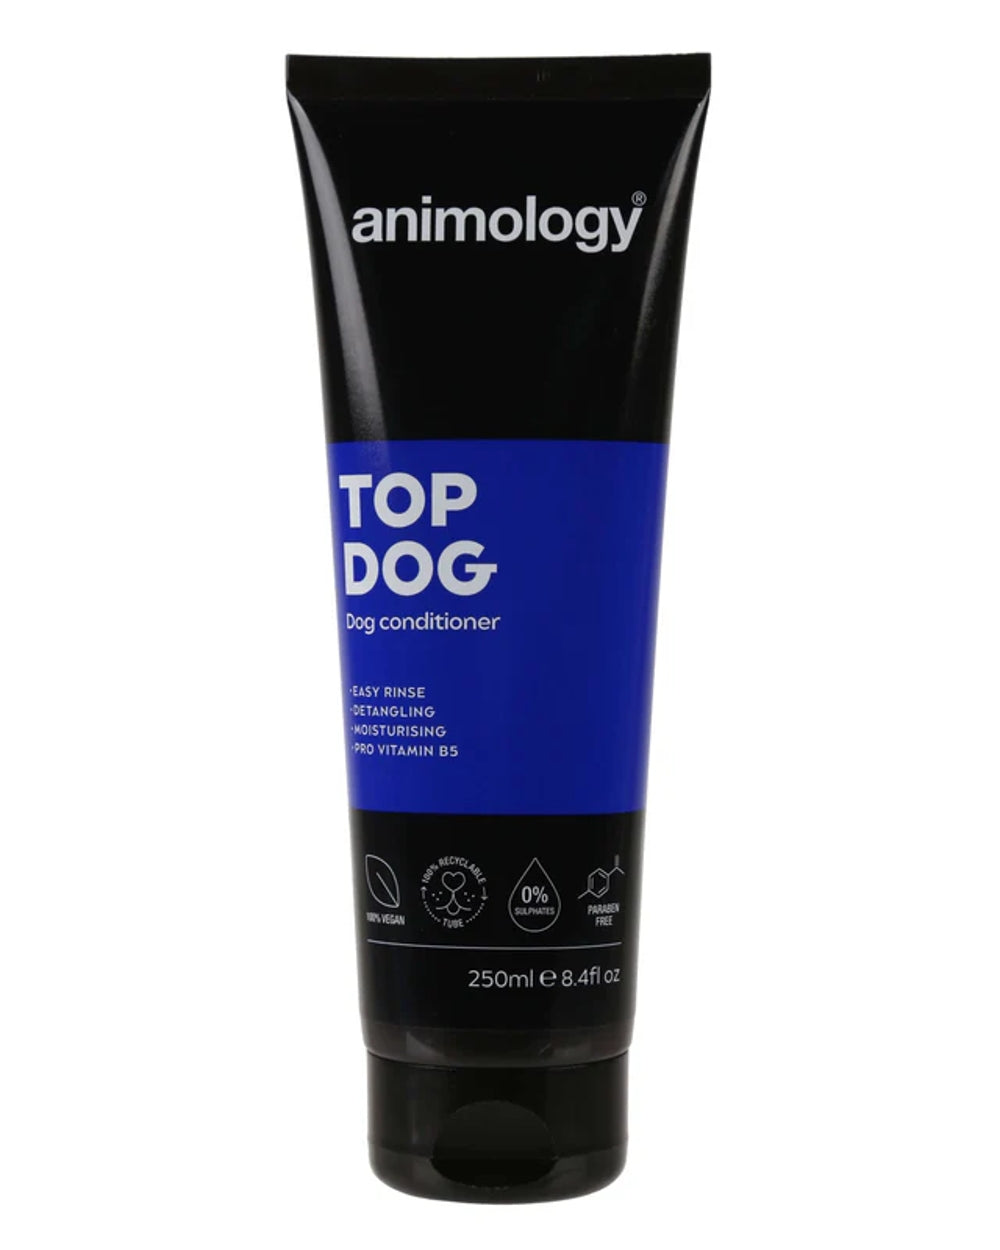 Animology Top Dog Conditioner 250ml on white background